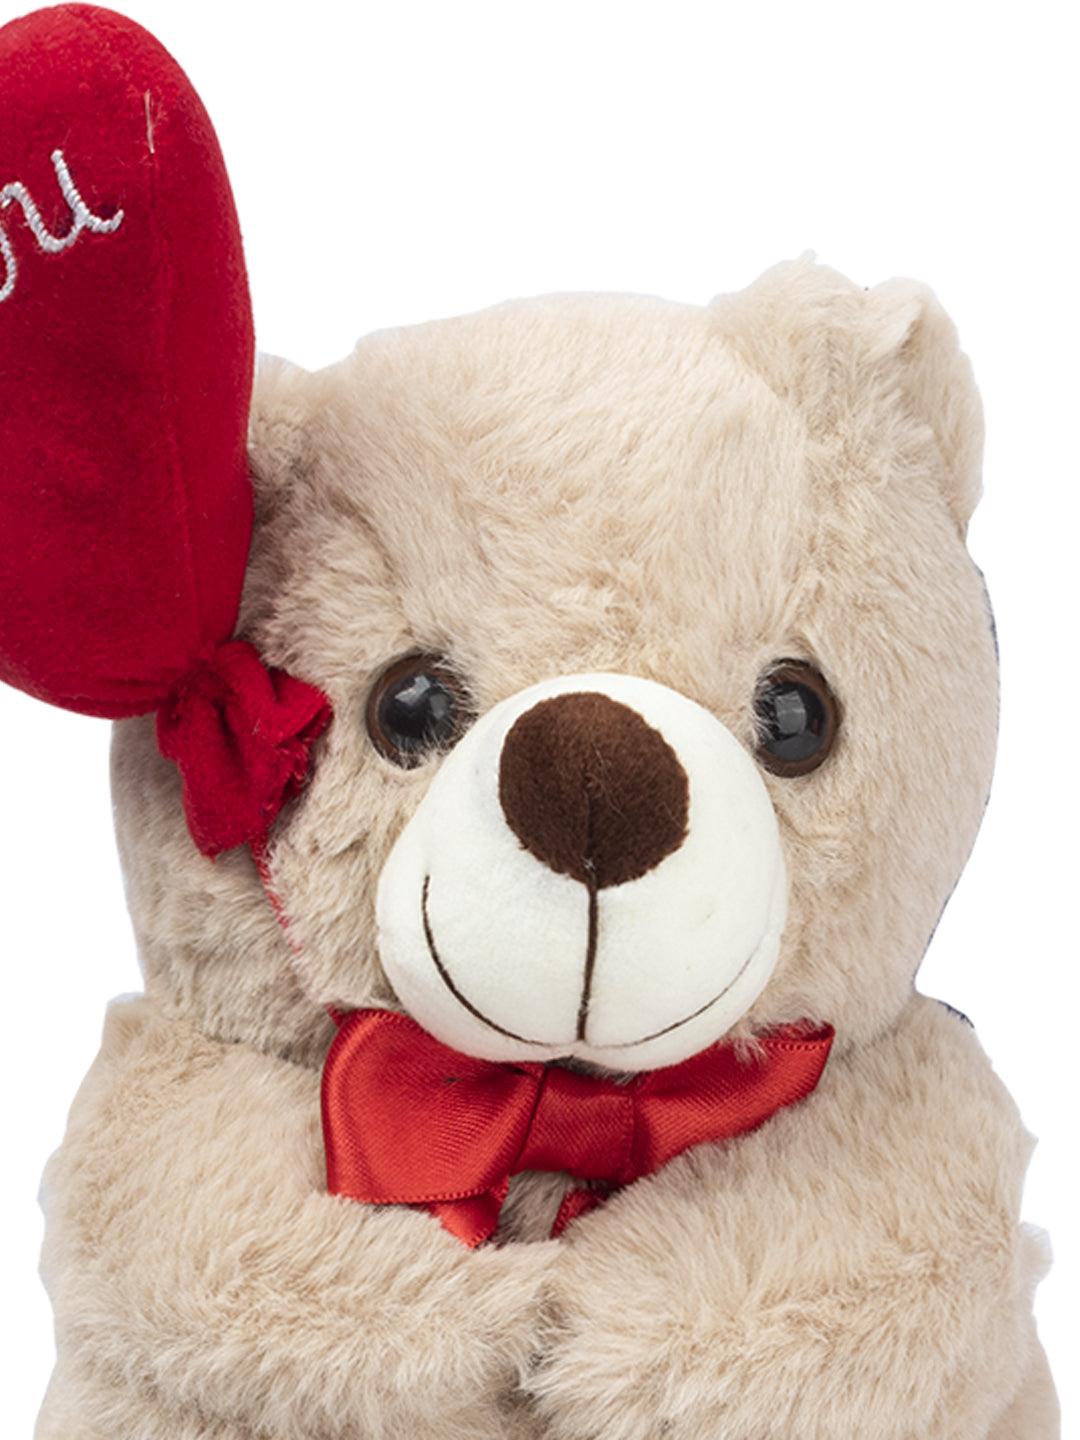 Rainbow Teddy Bear Valentine Gift